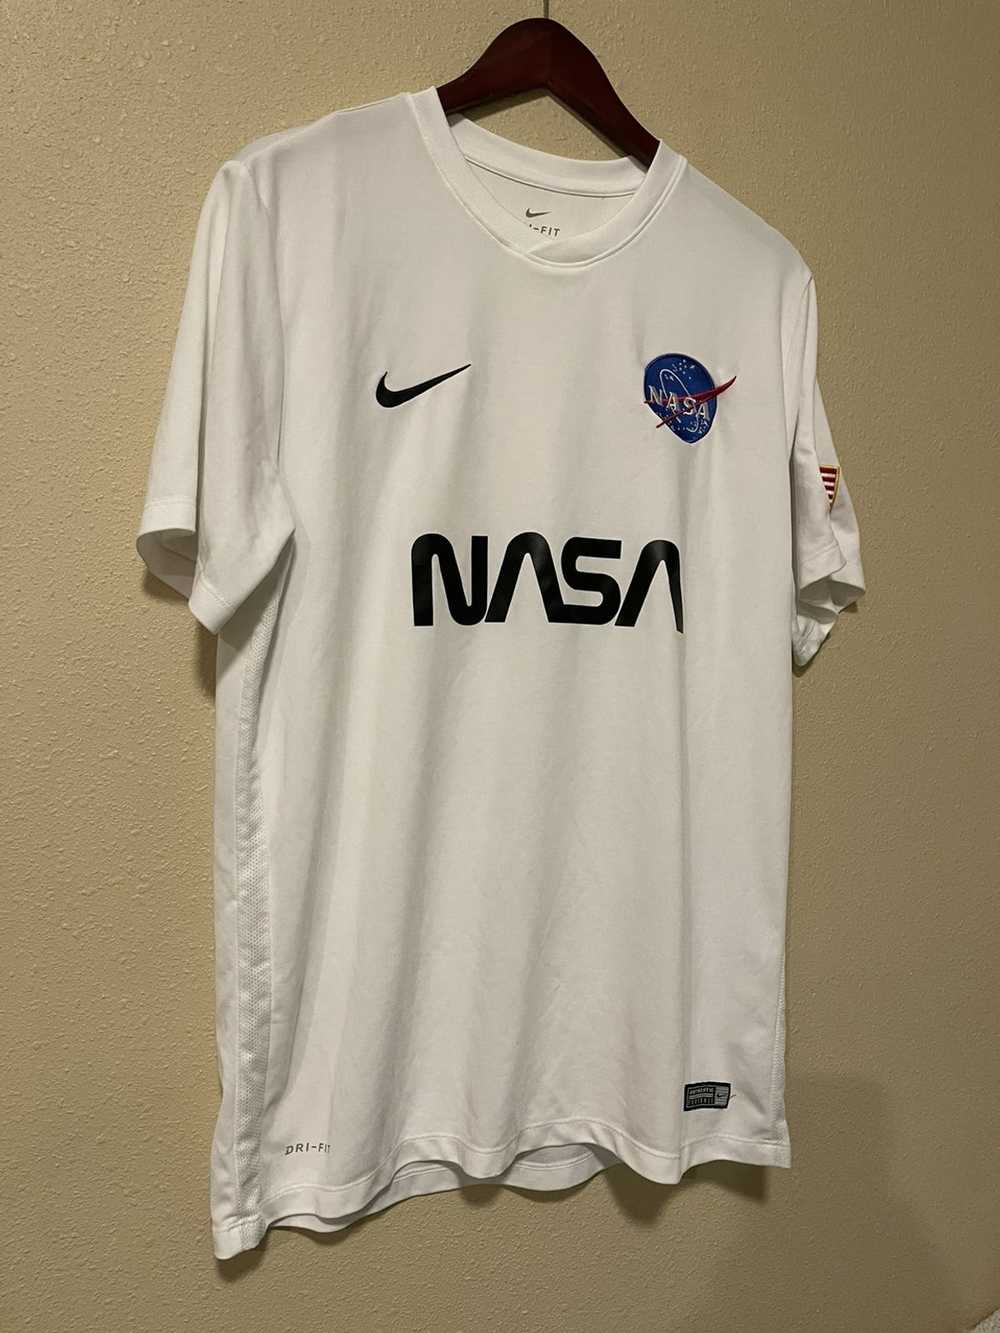 Nike Nike nasa astronaut jersey Sz XL - image 2